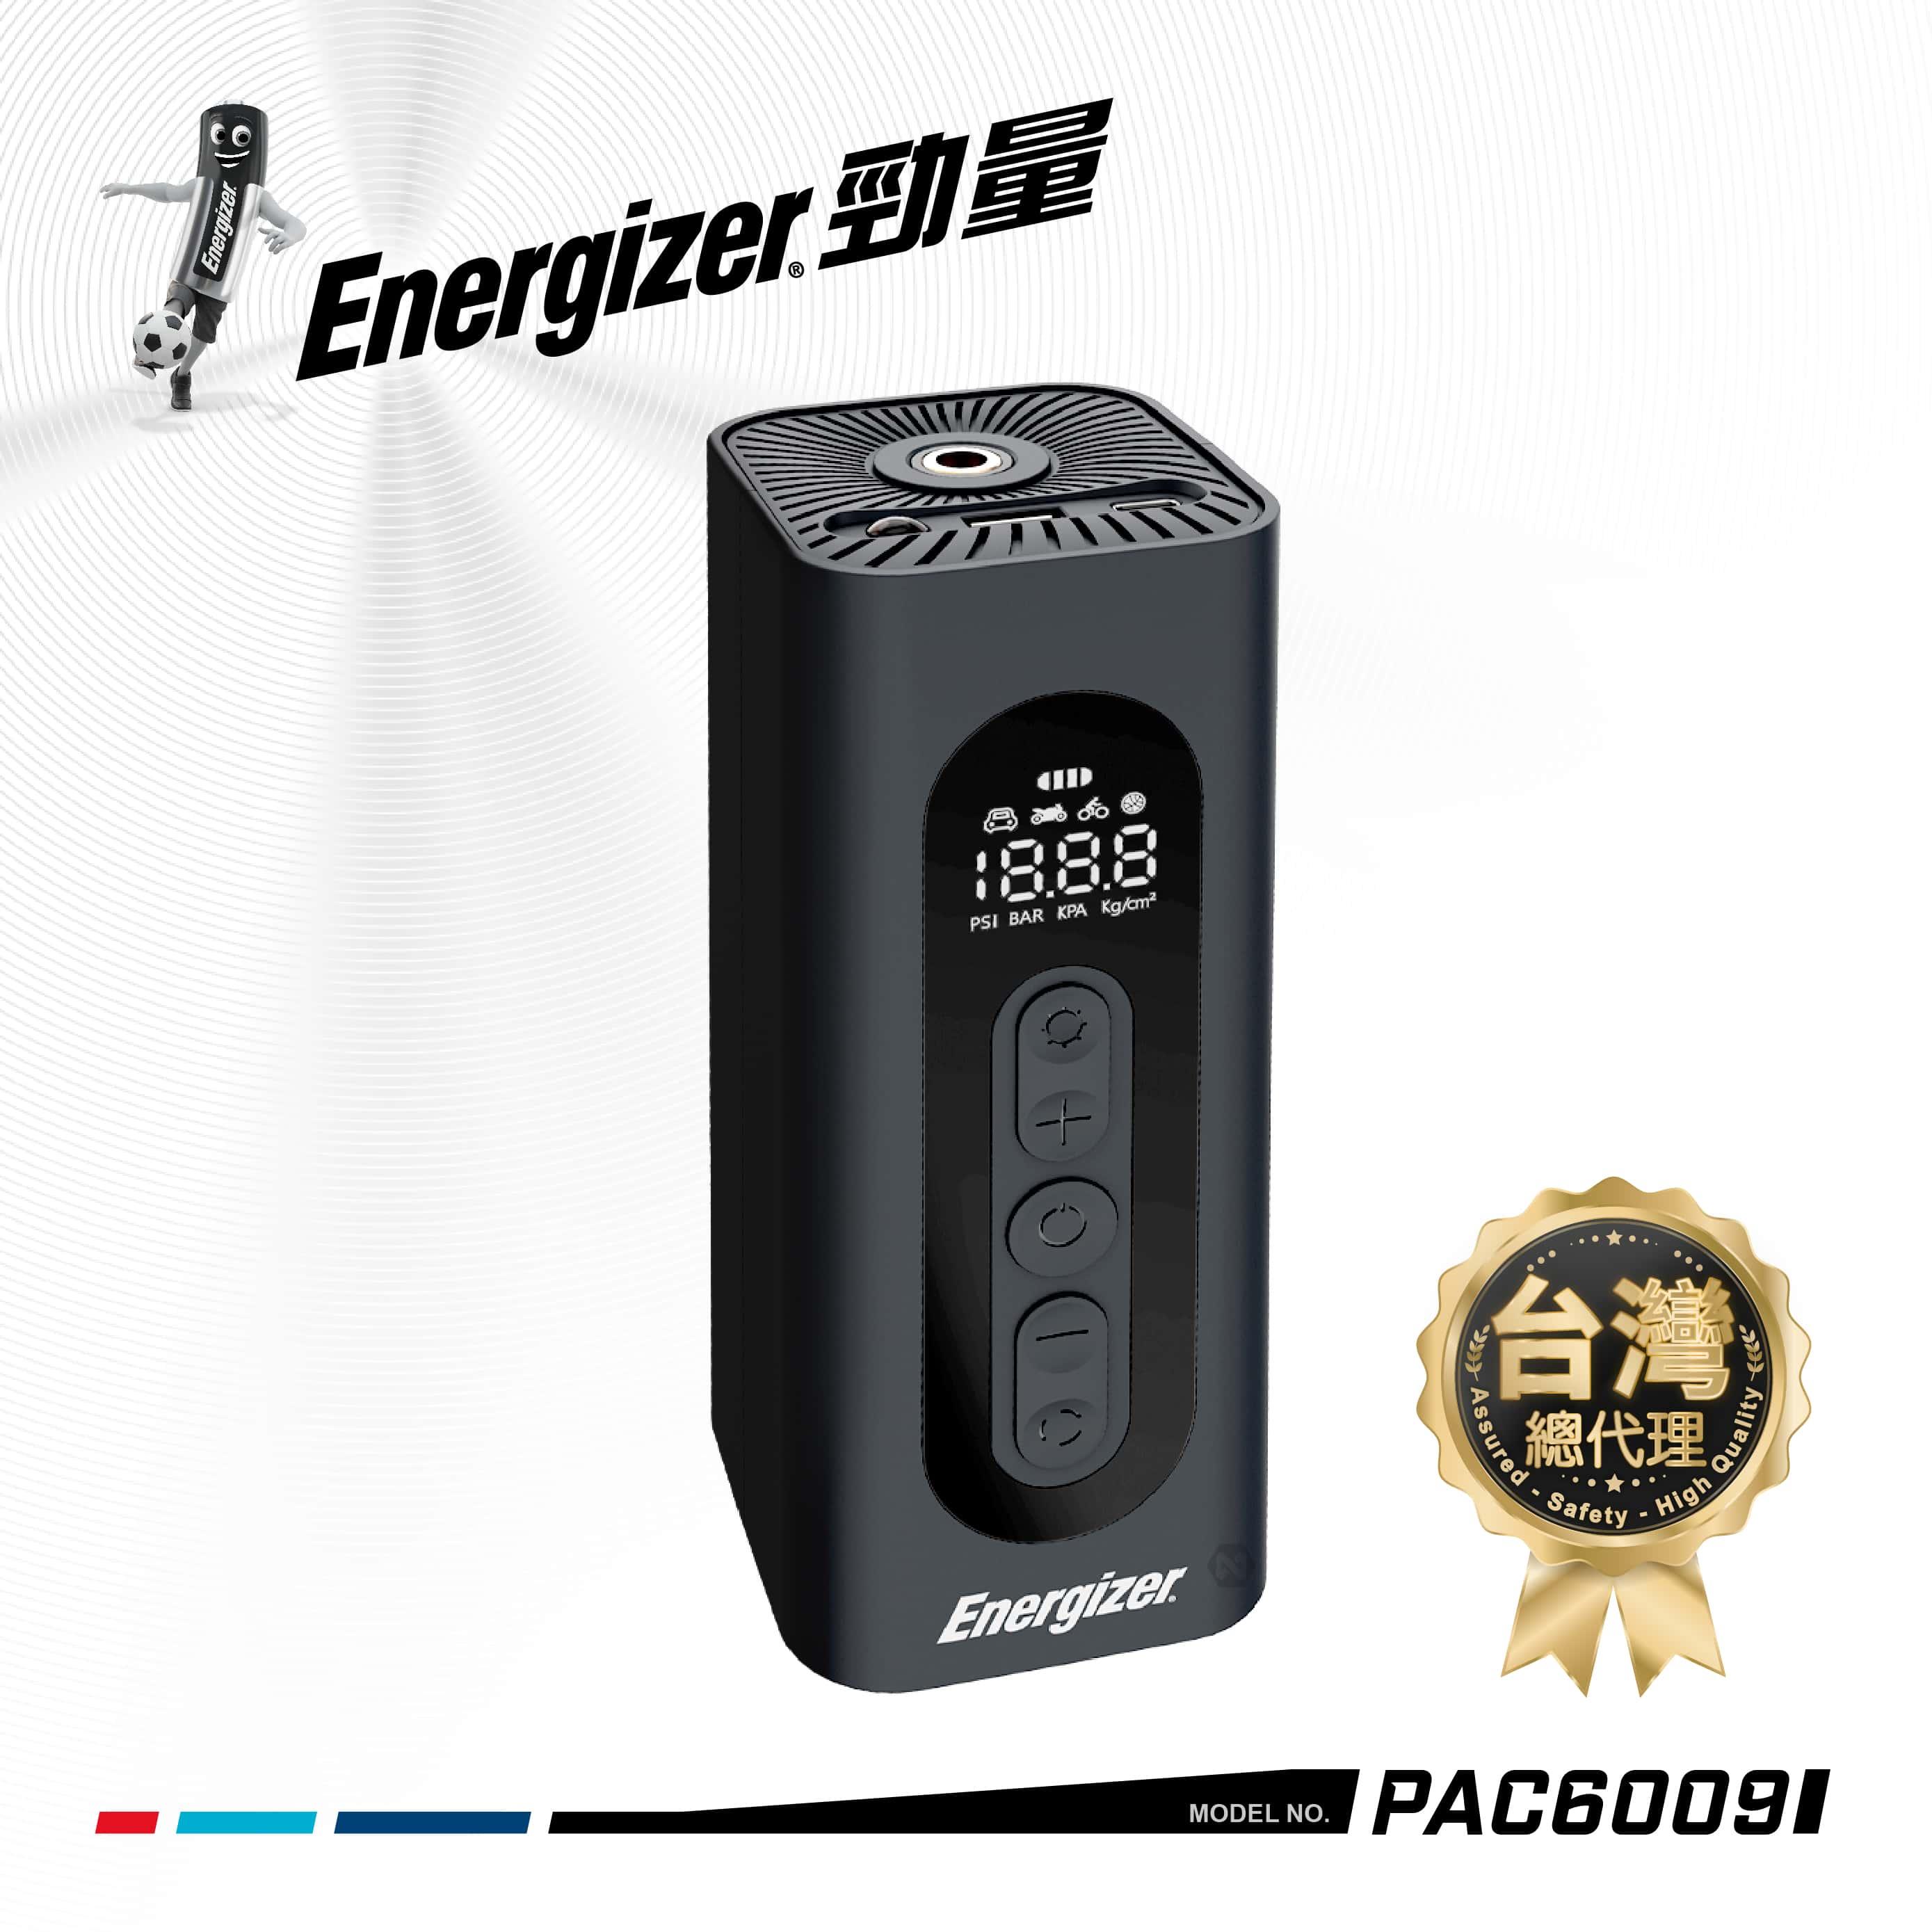 Energizer 勁量 智慧多功能電動打氣機 PAC6009